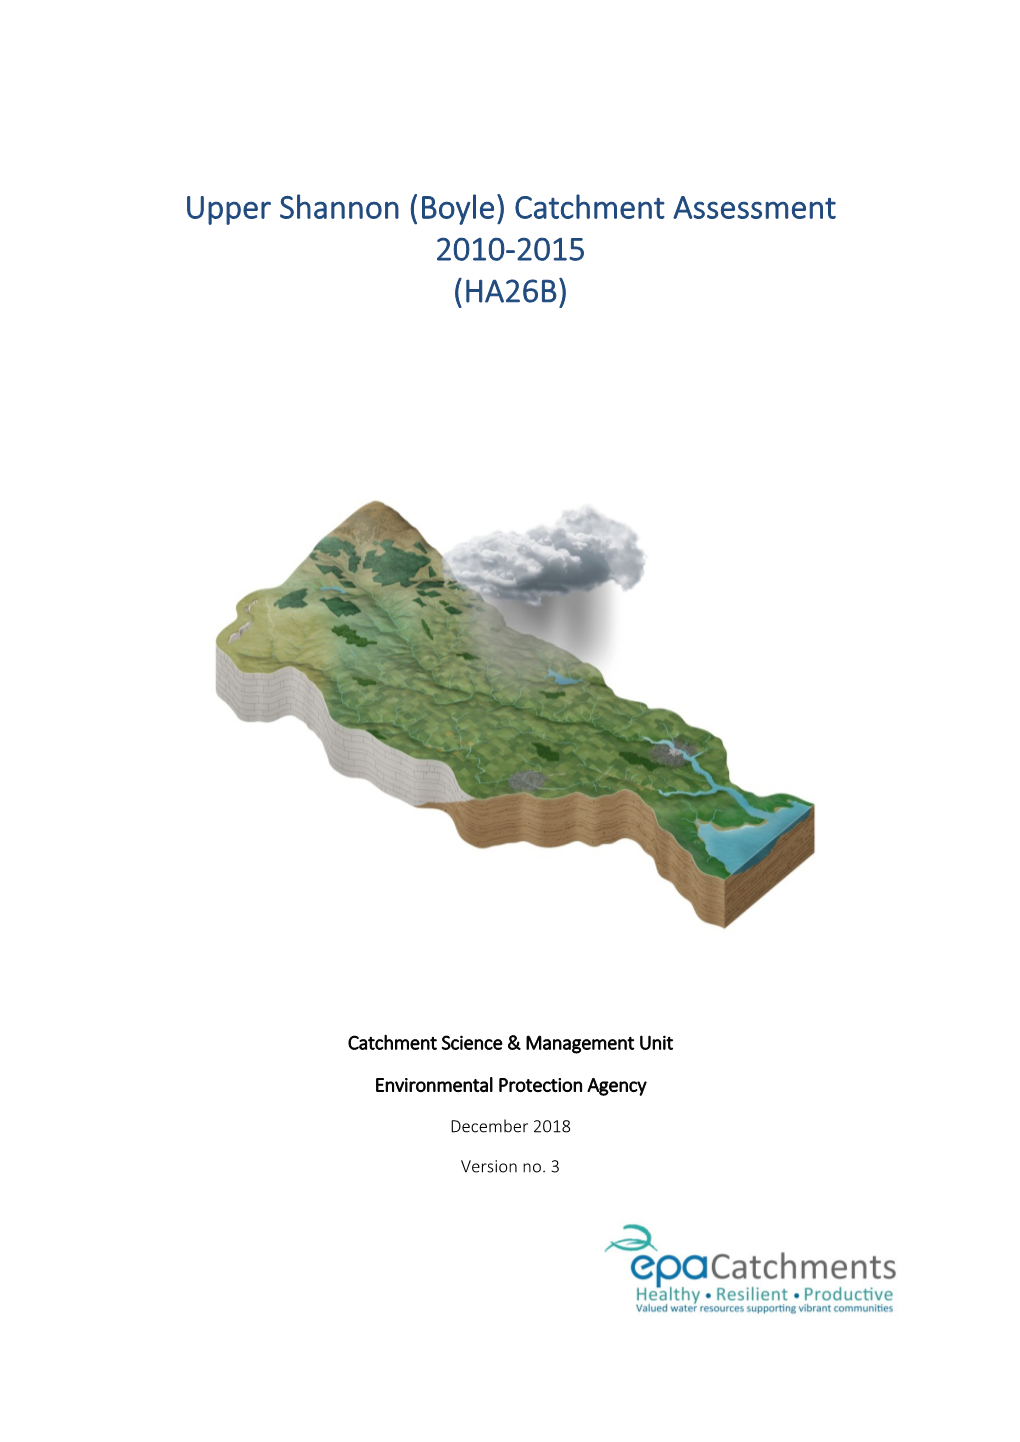 Upper Shannon (Boyle) Catchment Assessment 2010-2015 (HA26B)